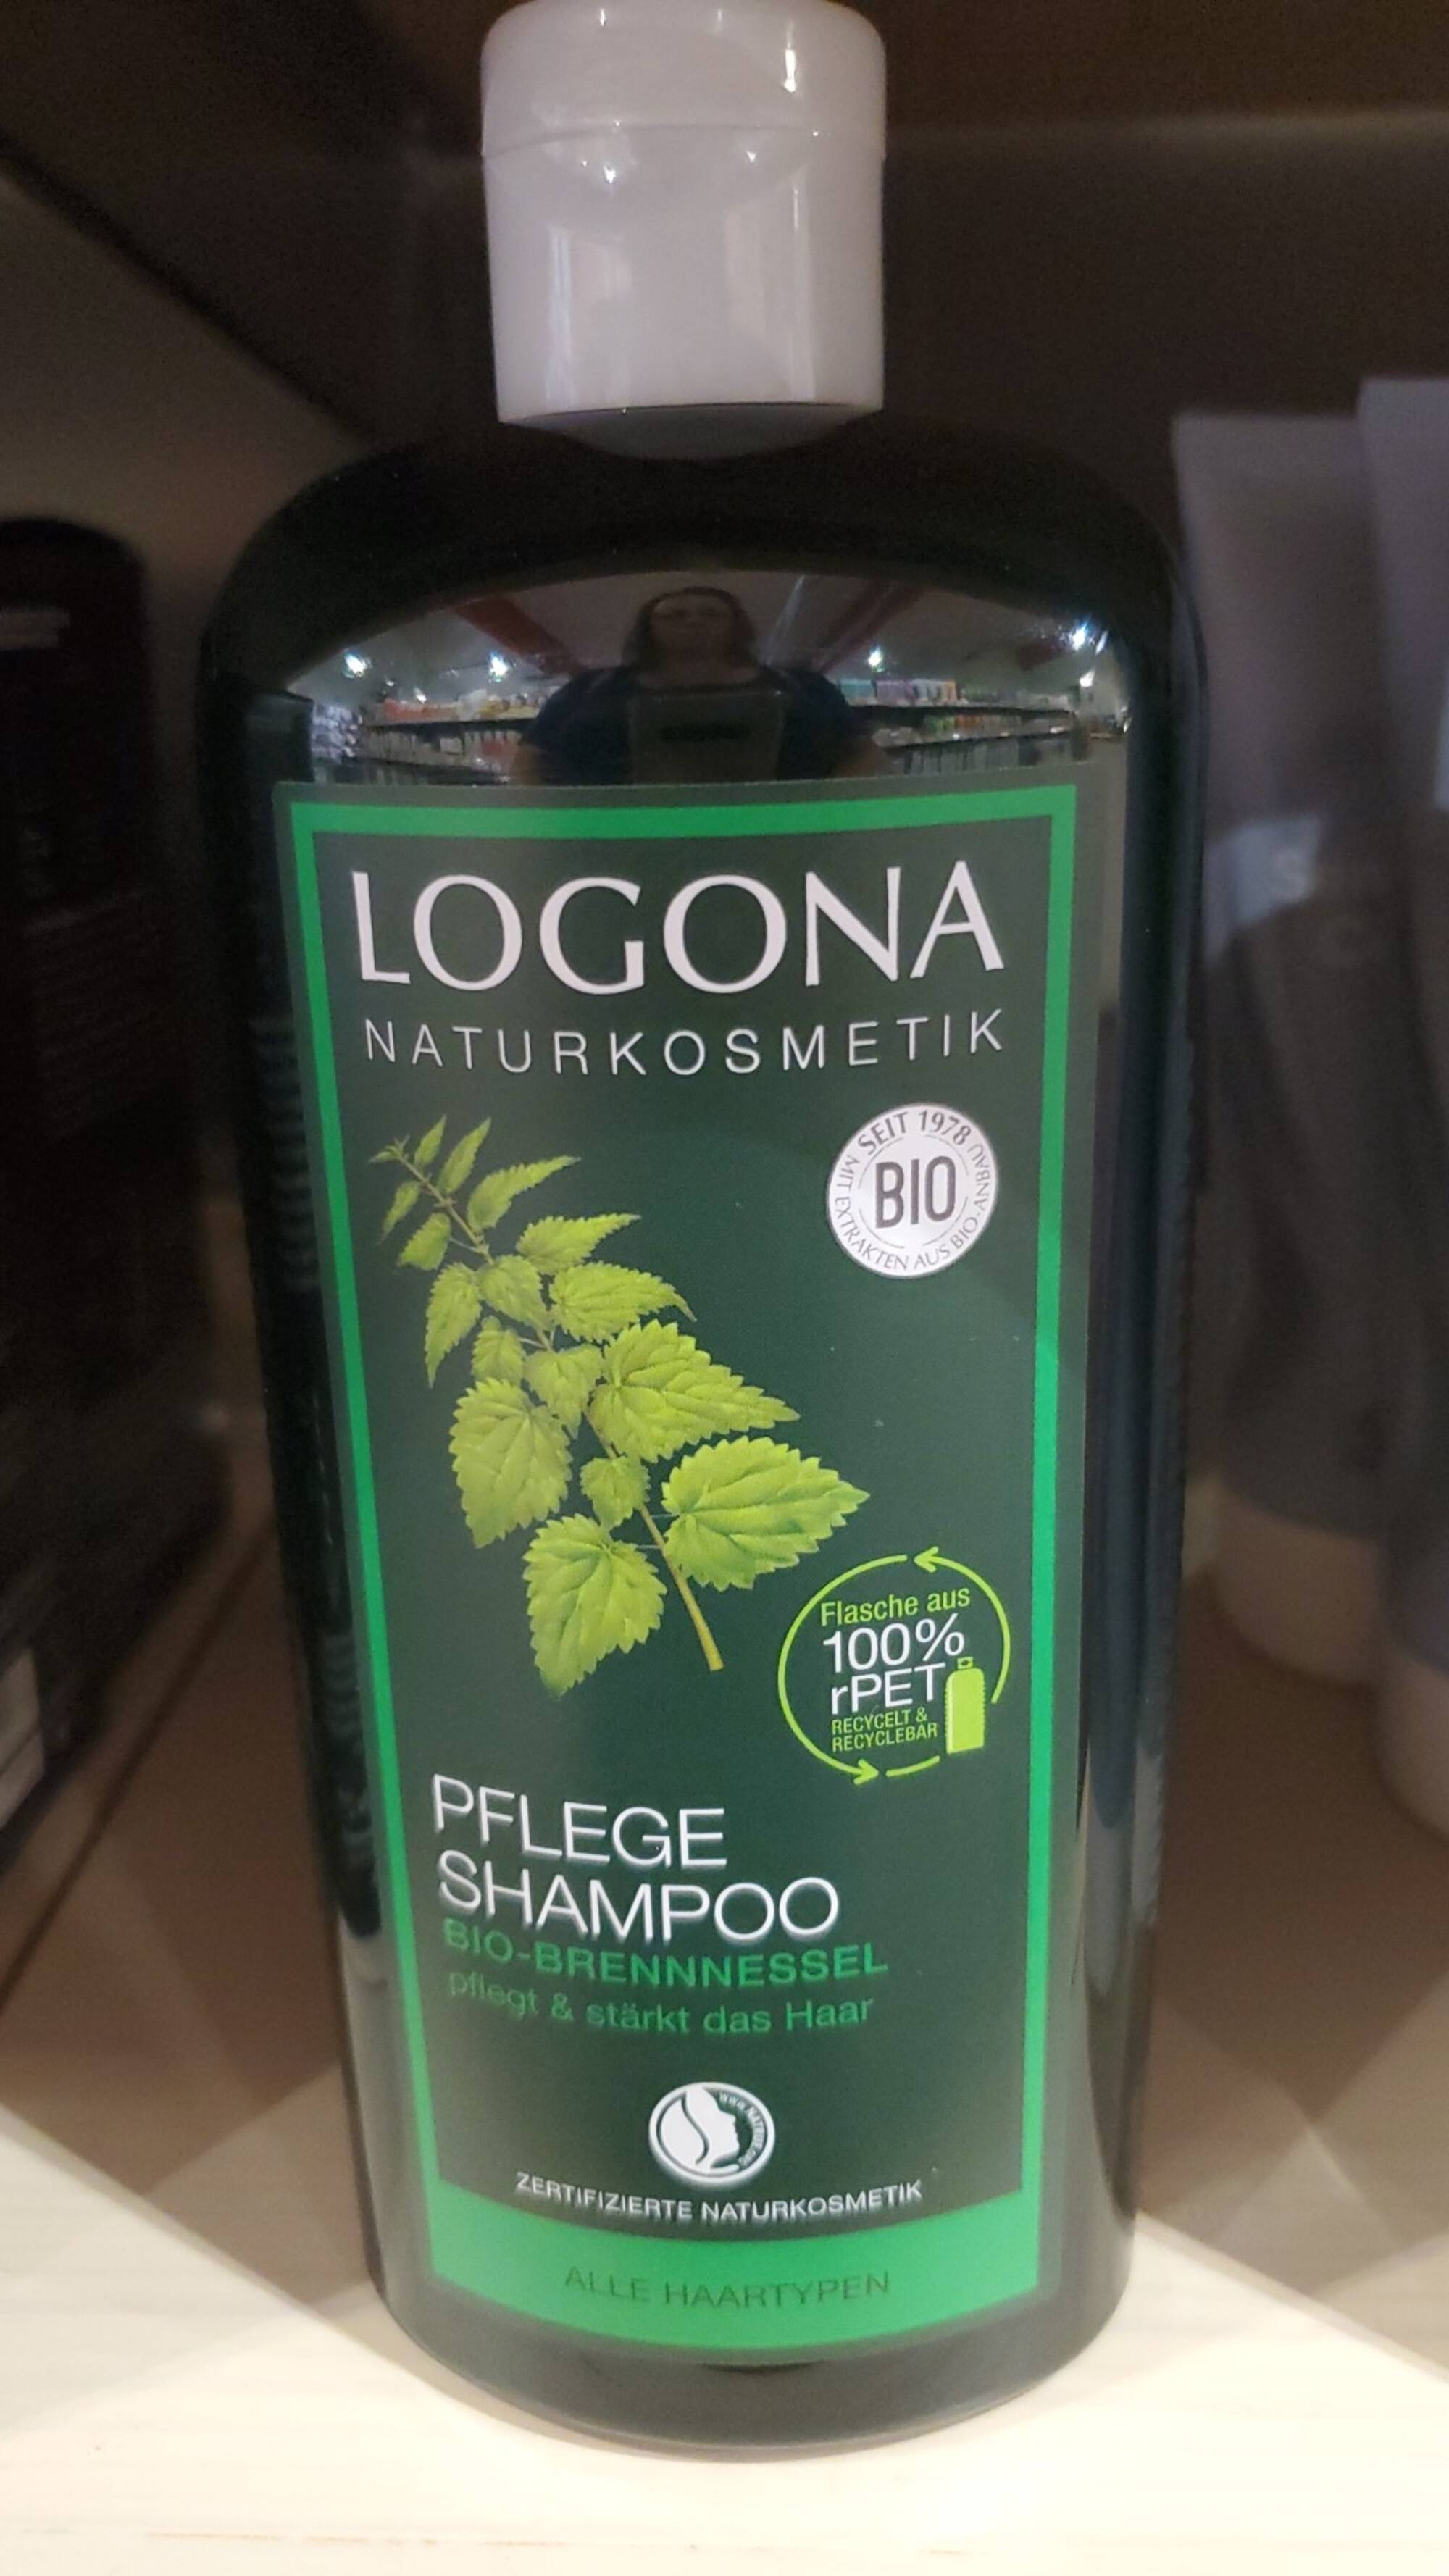 LOGONA - Pflege shampoo